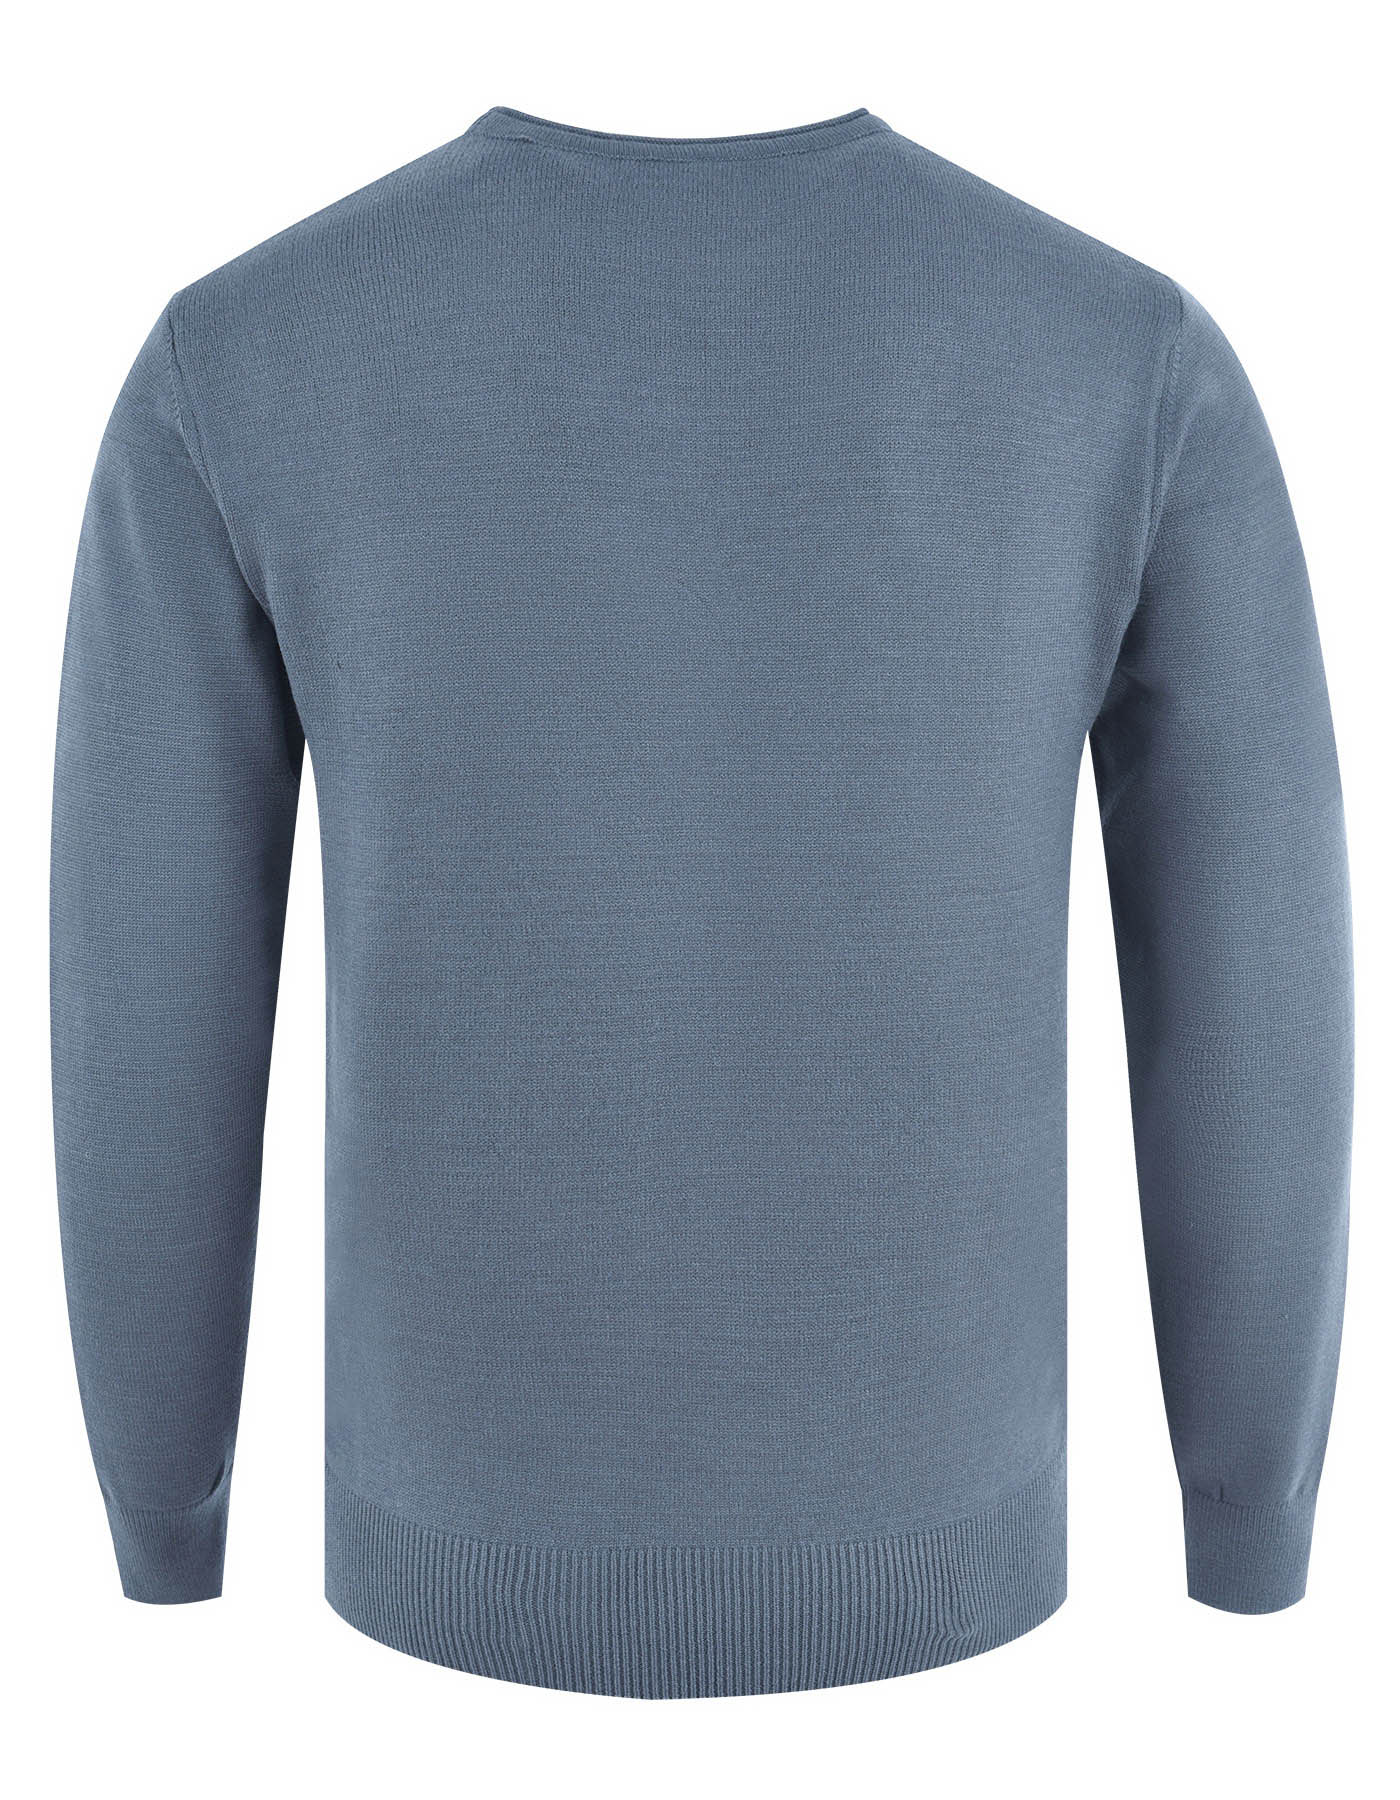 Grey Round Neck Sweater For Men